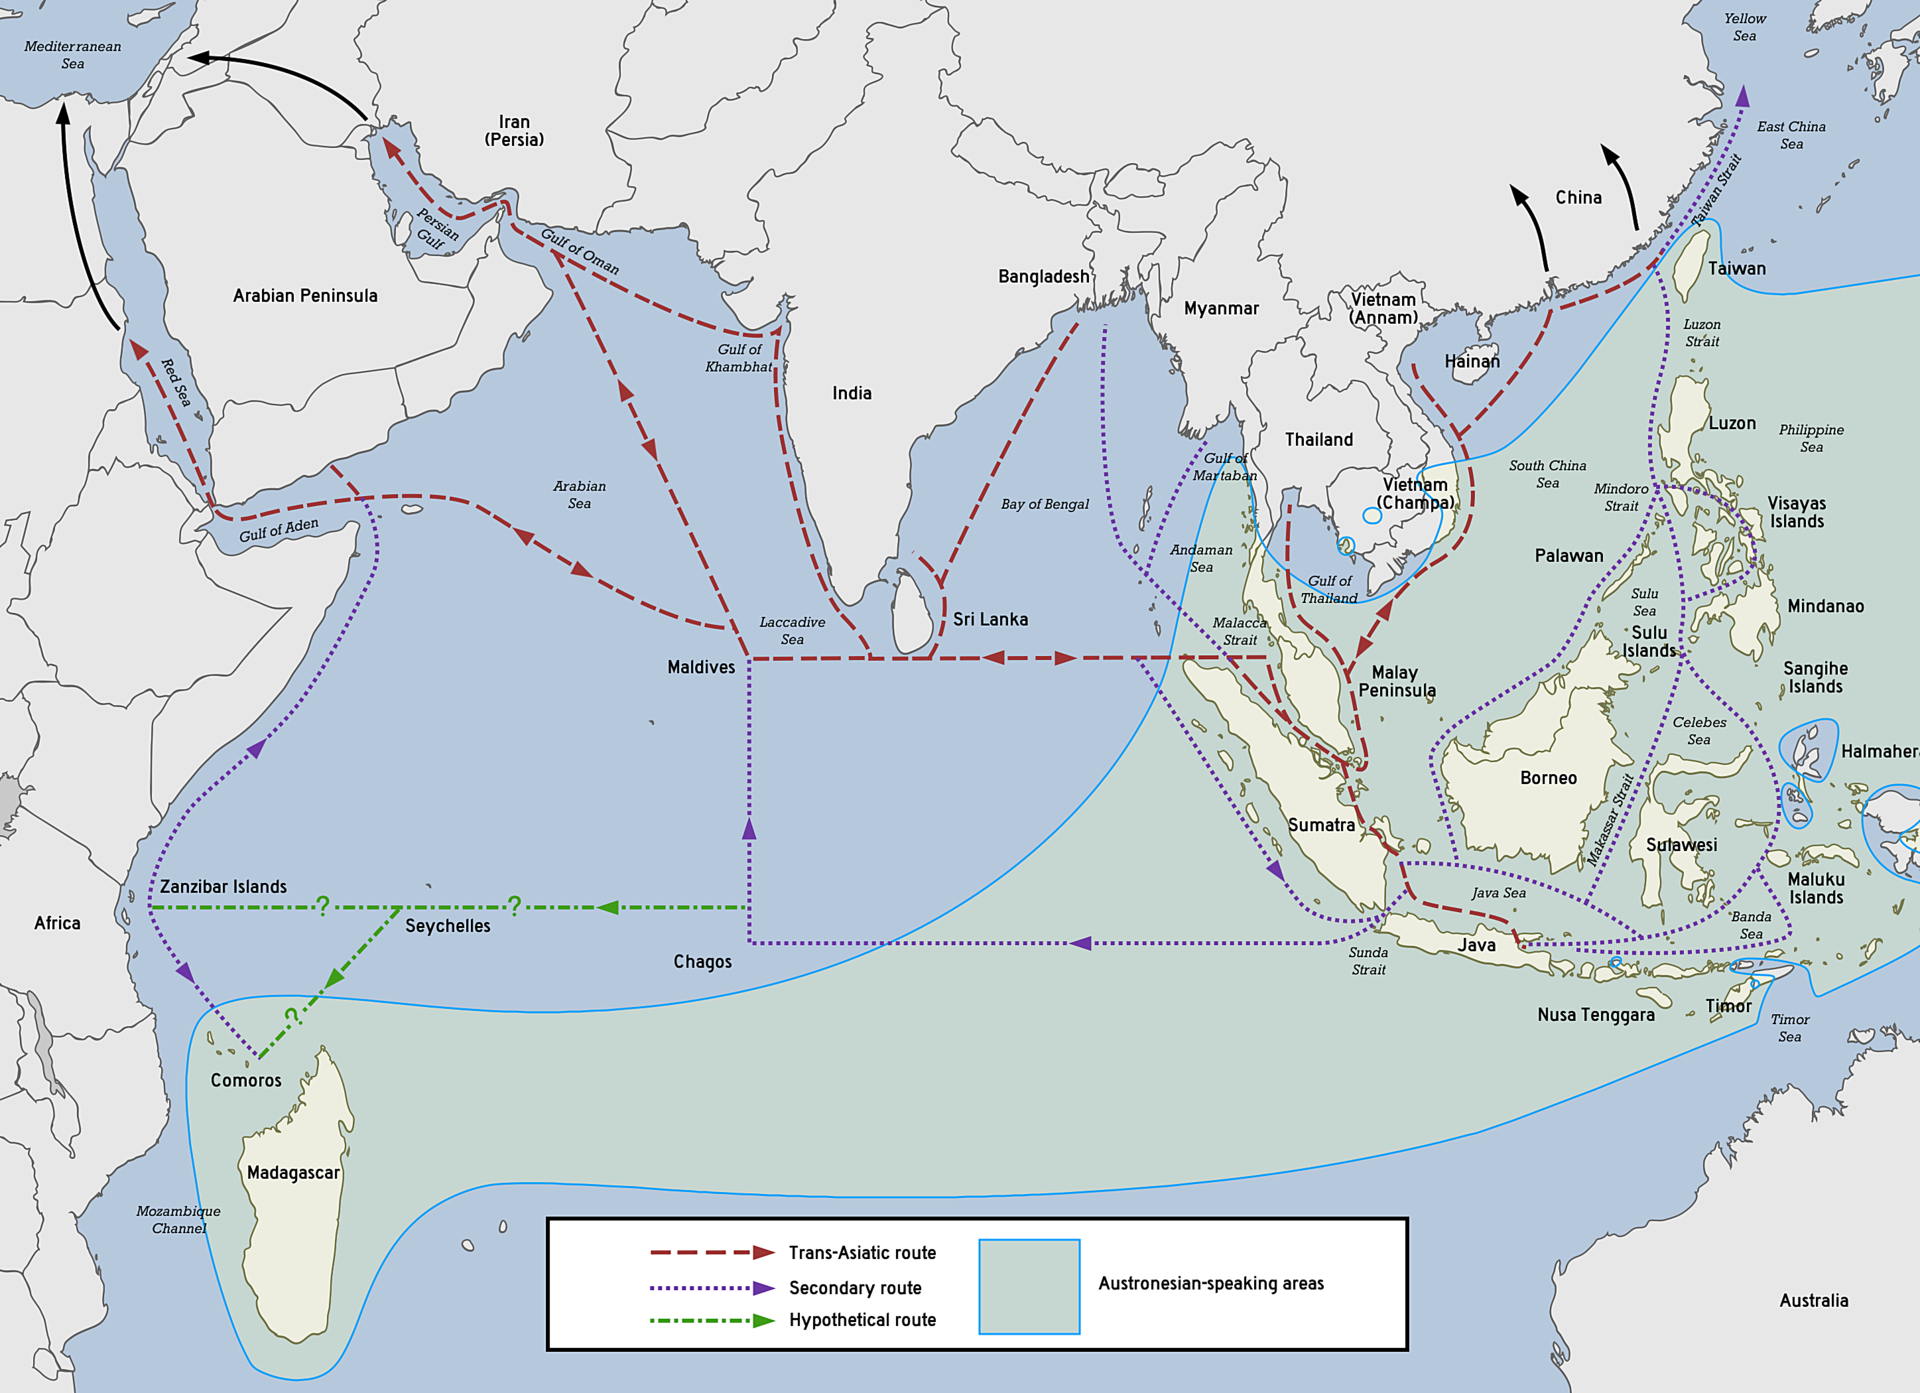 Indian Ocean Trade Game